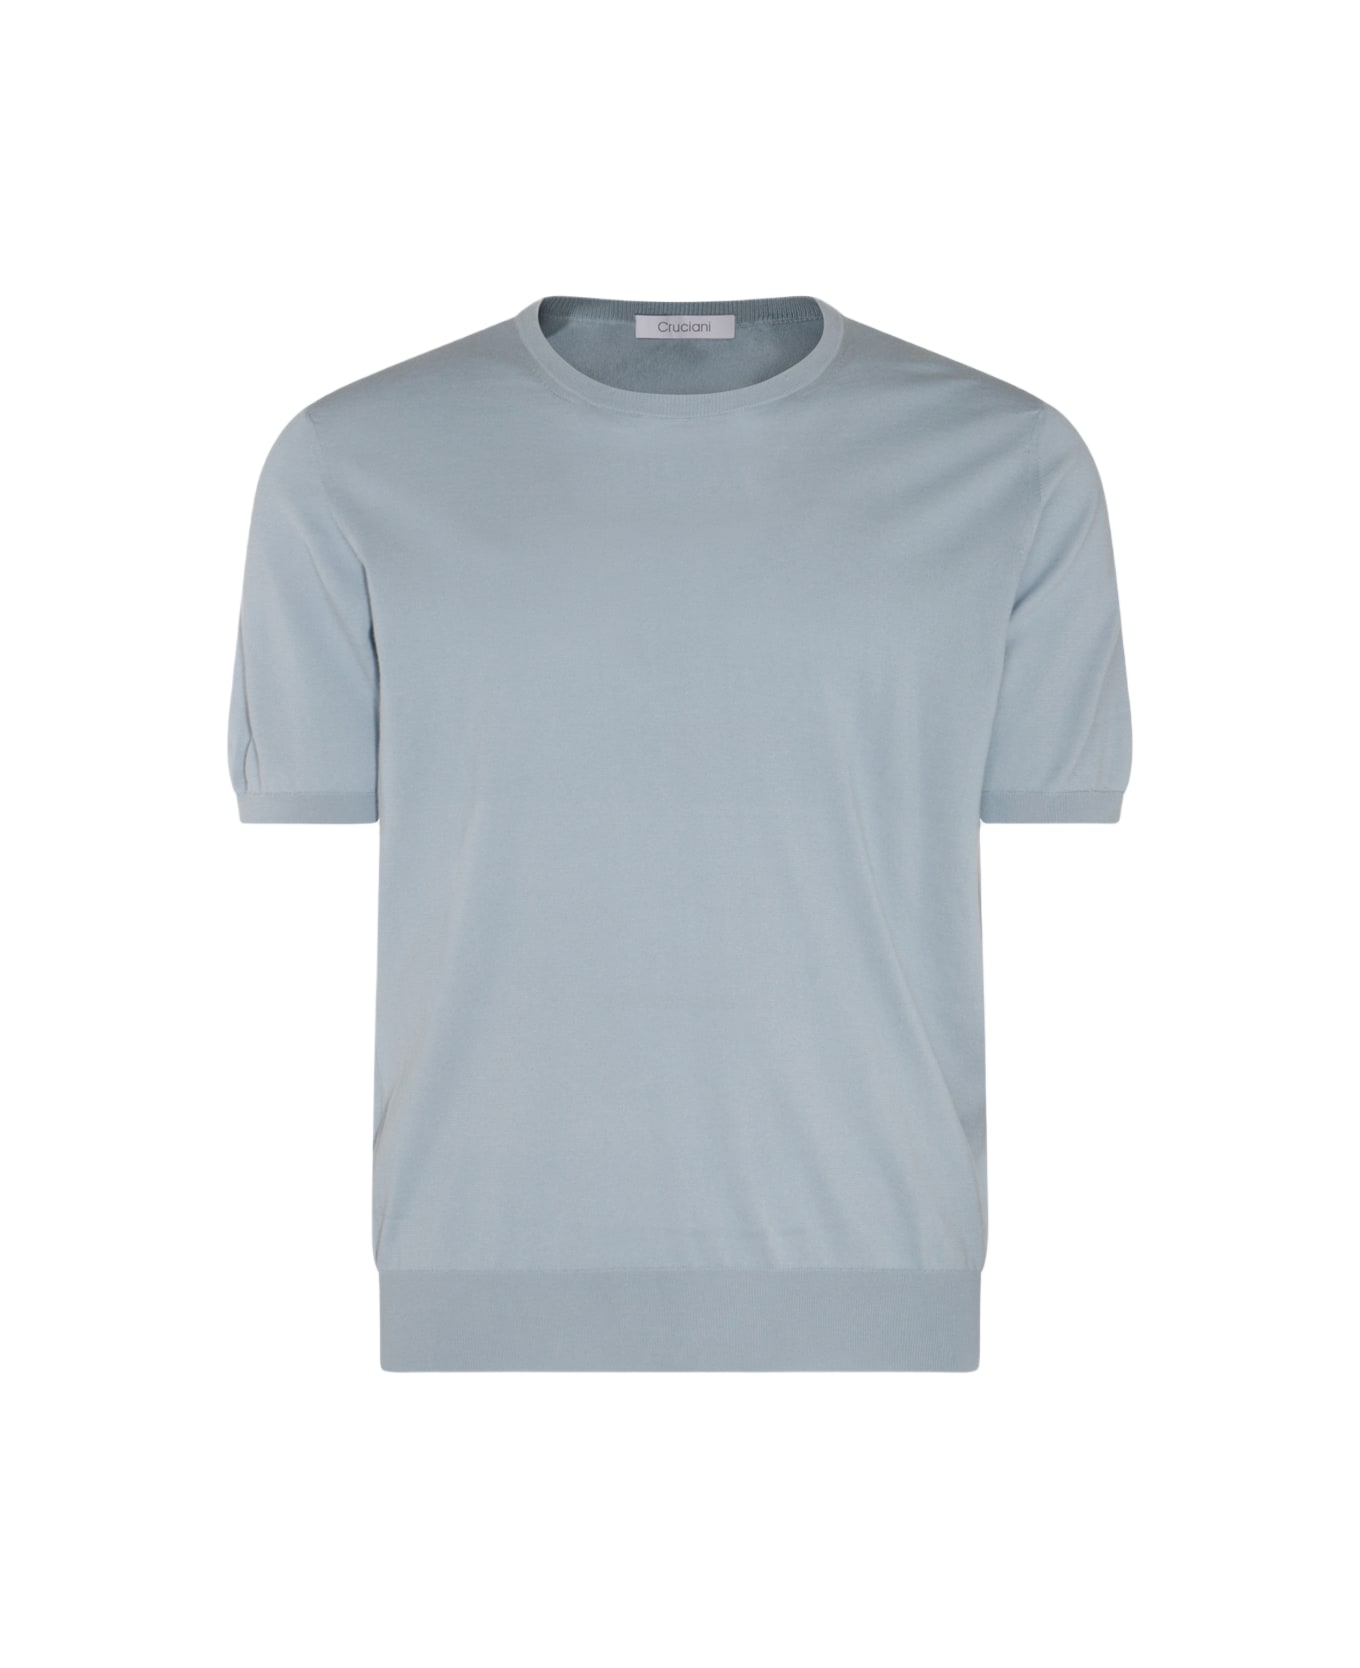 Cruciani Light Blue Cotton T-shirt - Cielo シャツ